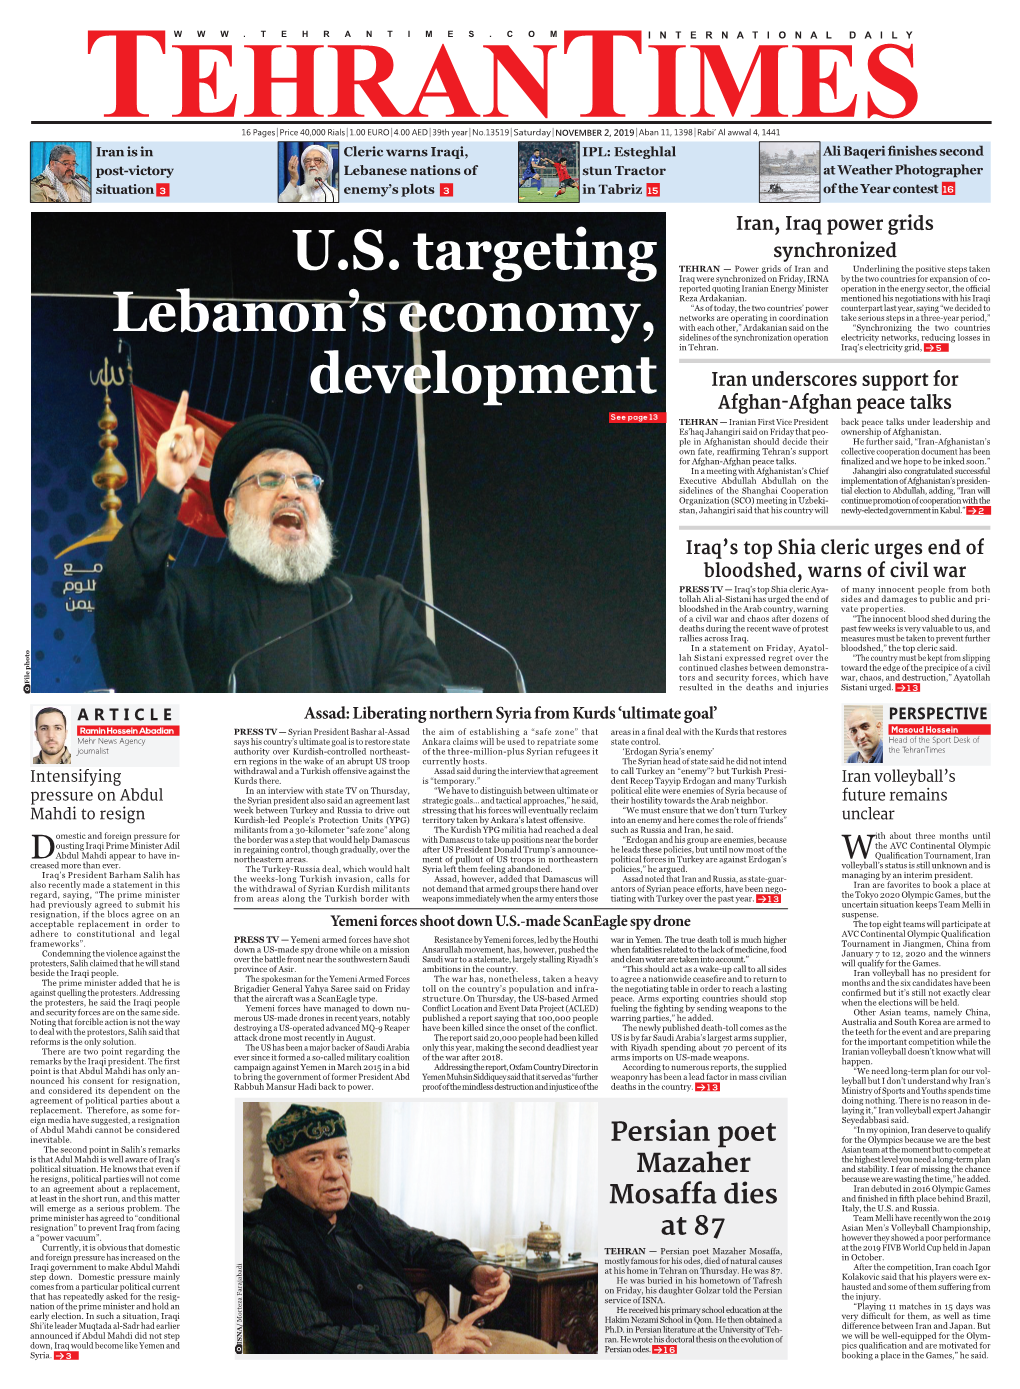 U.S. Targeting Lebanon's Economy, Development